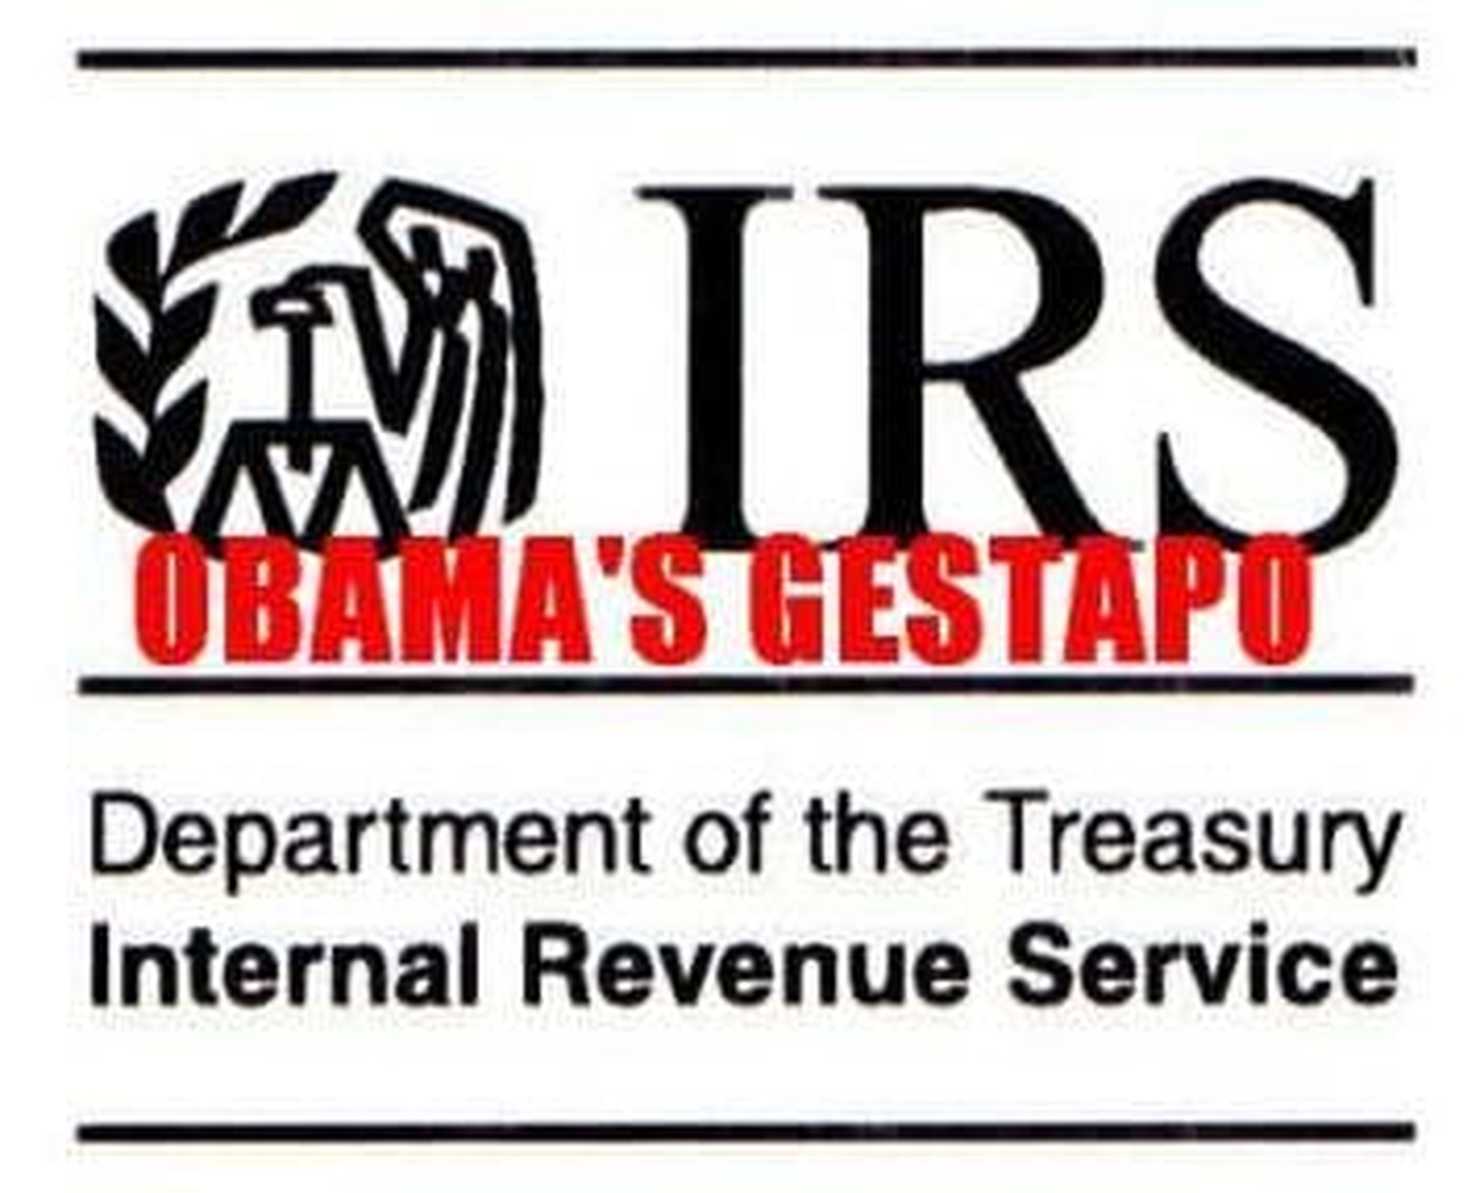 Gestapo Logo - South Carolina GOP compares IRS to the Gestapo - The Washington Post